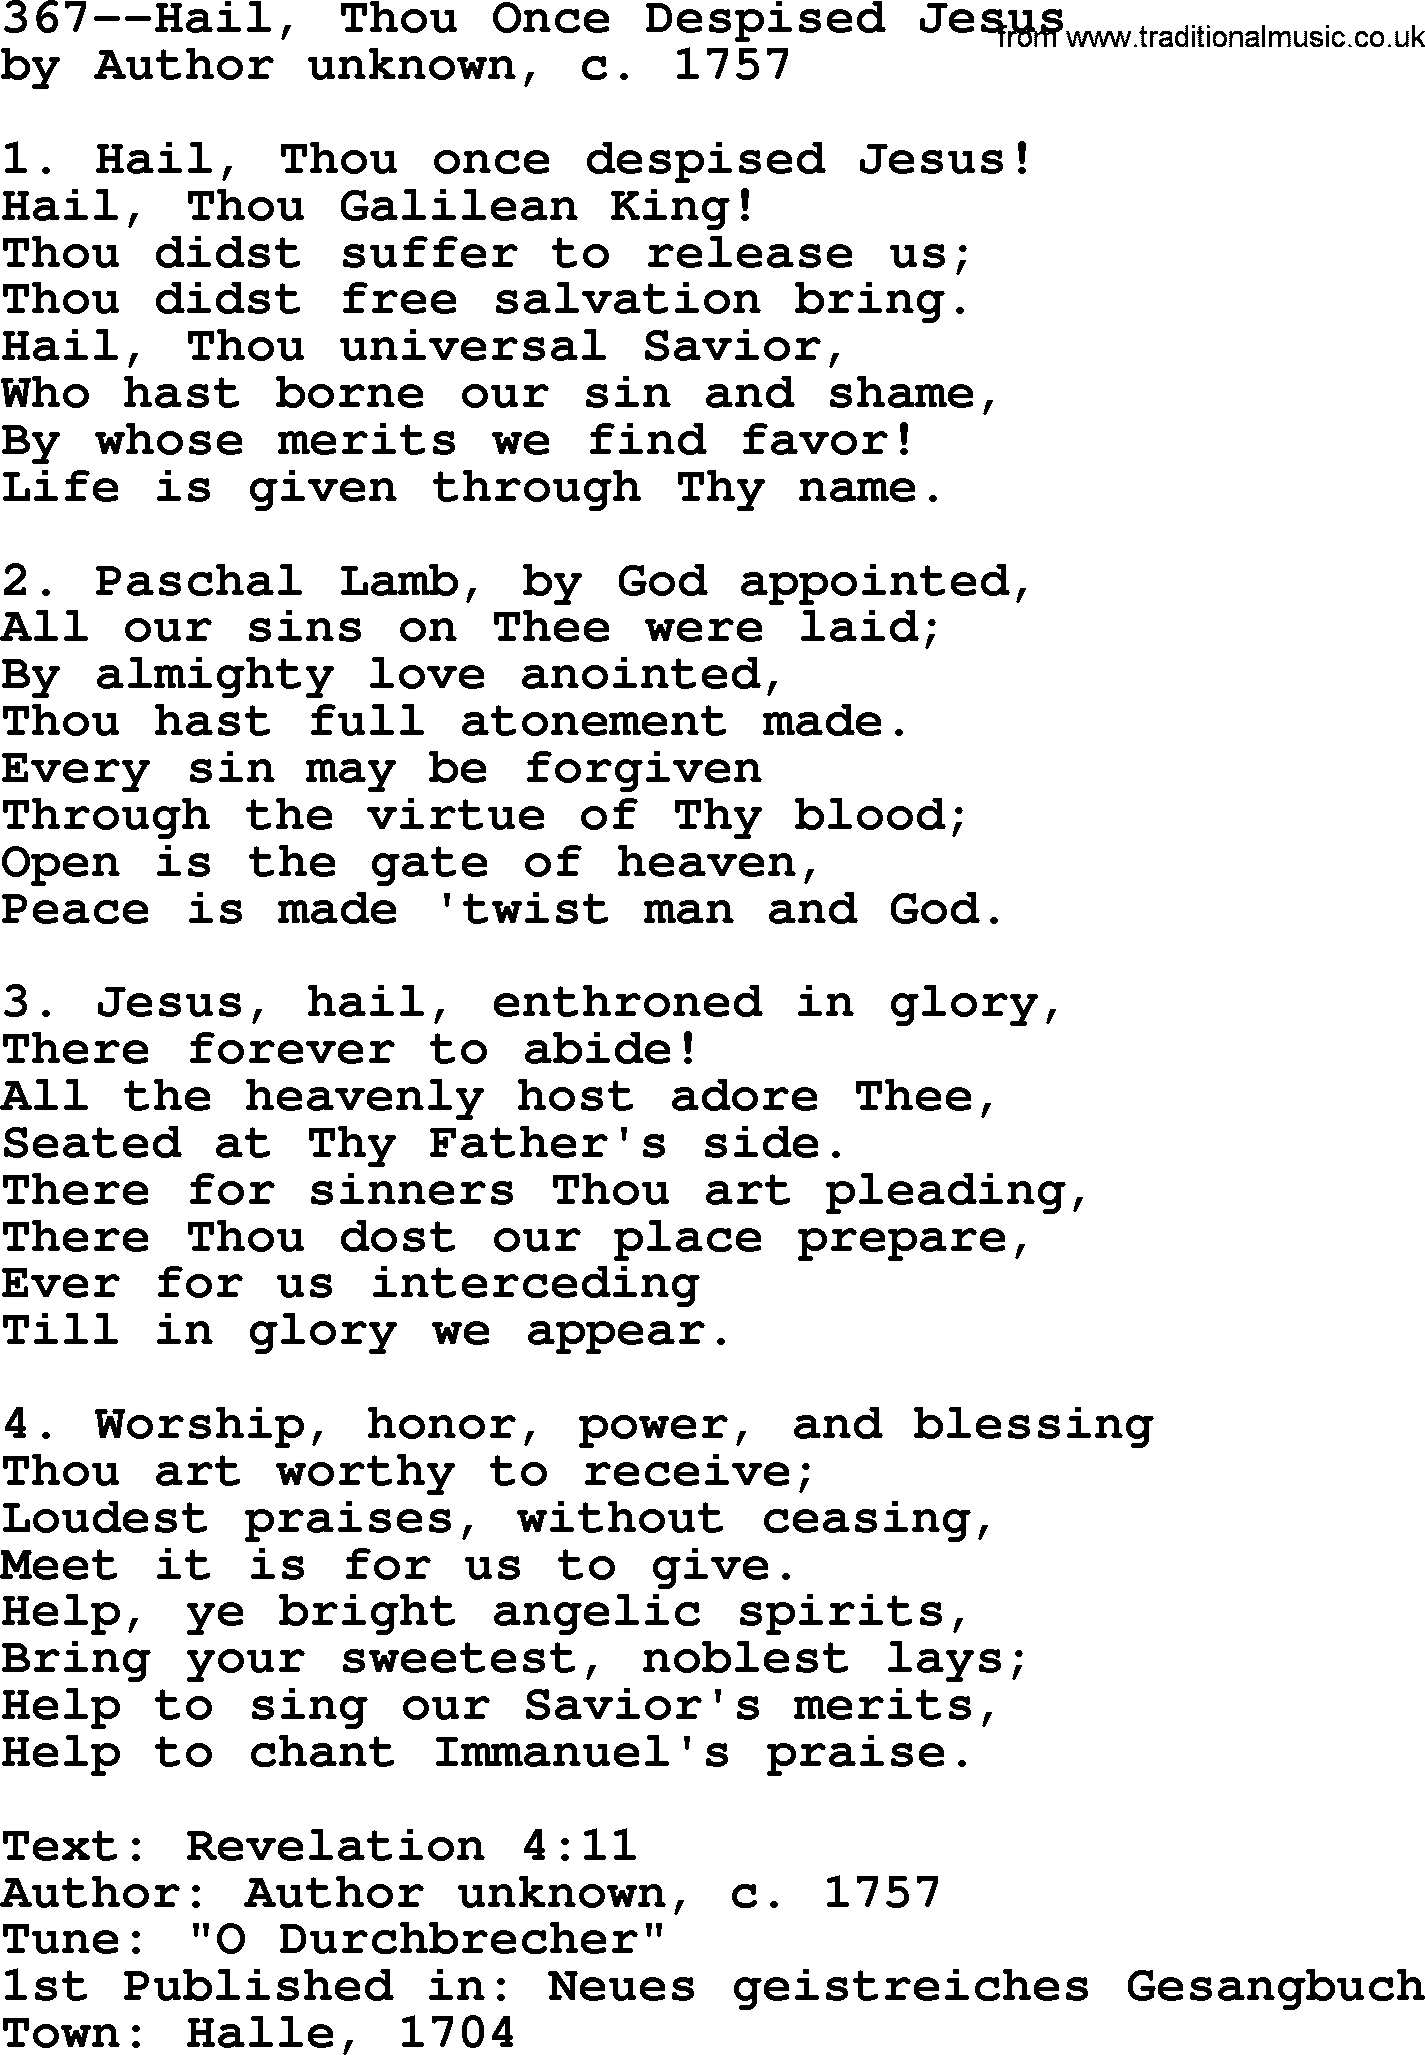 Lutheran Hymn: 367--Hail, Thou Once Despised Jesus.txt lyrics with PDF